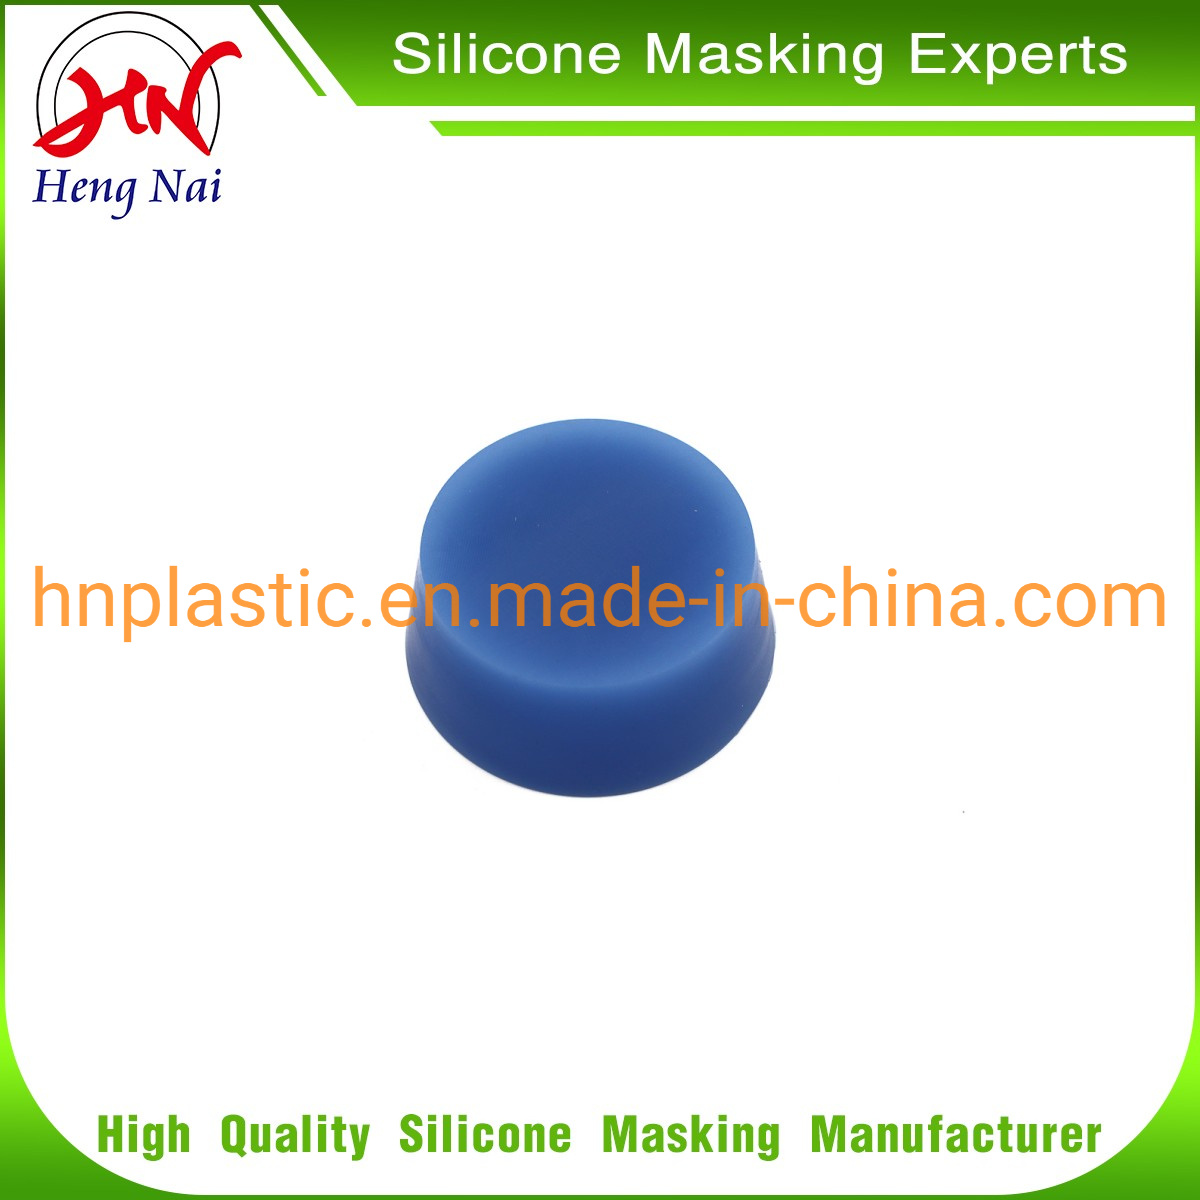 
                High Temperature Resistance Silicone Maskin